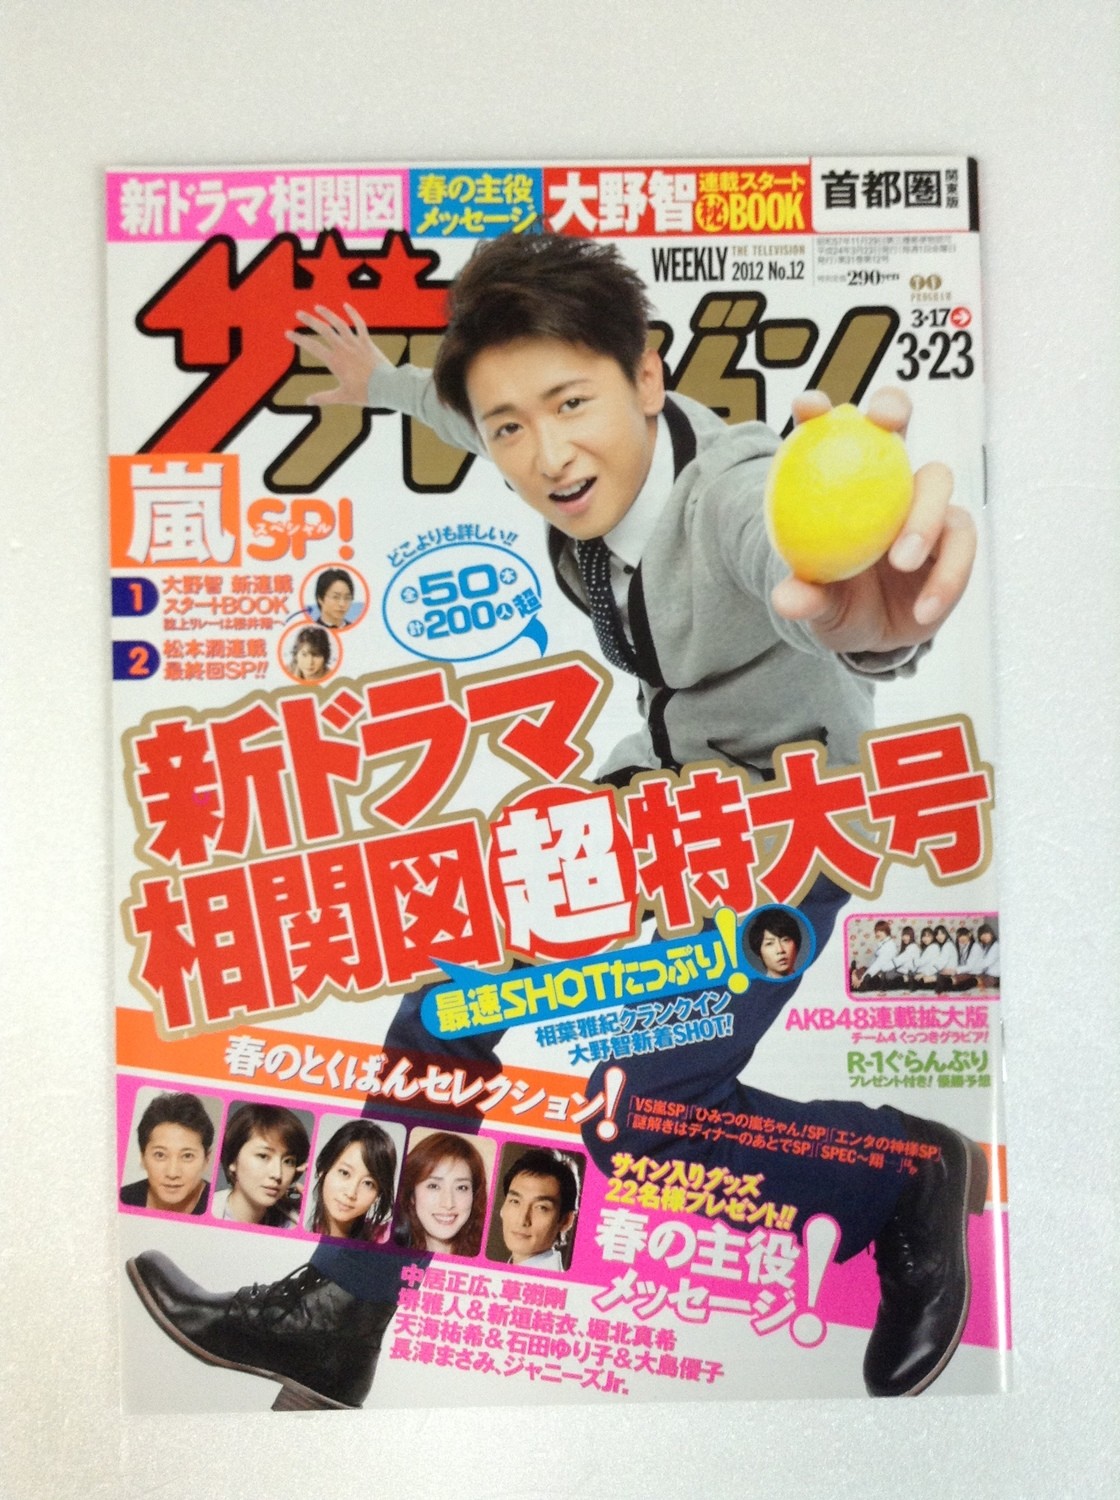 The Television Weekly Magazine 2012 no.12 featuring Ohno Satoshi